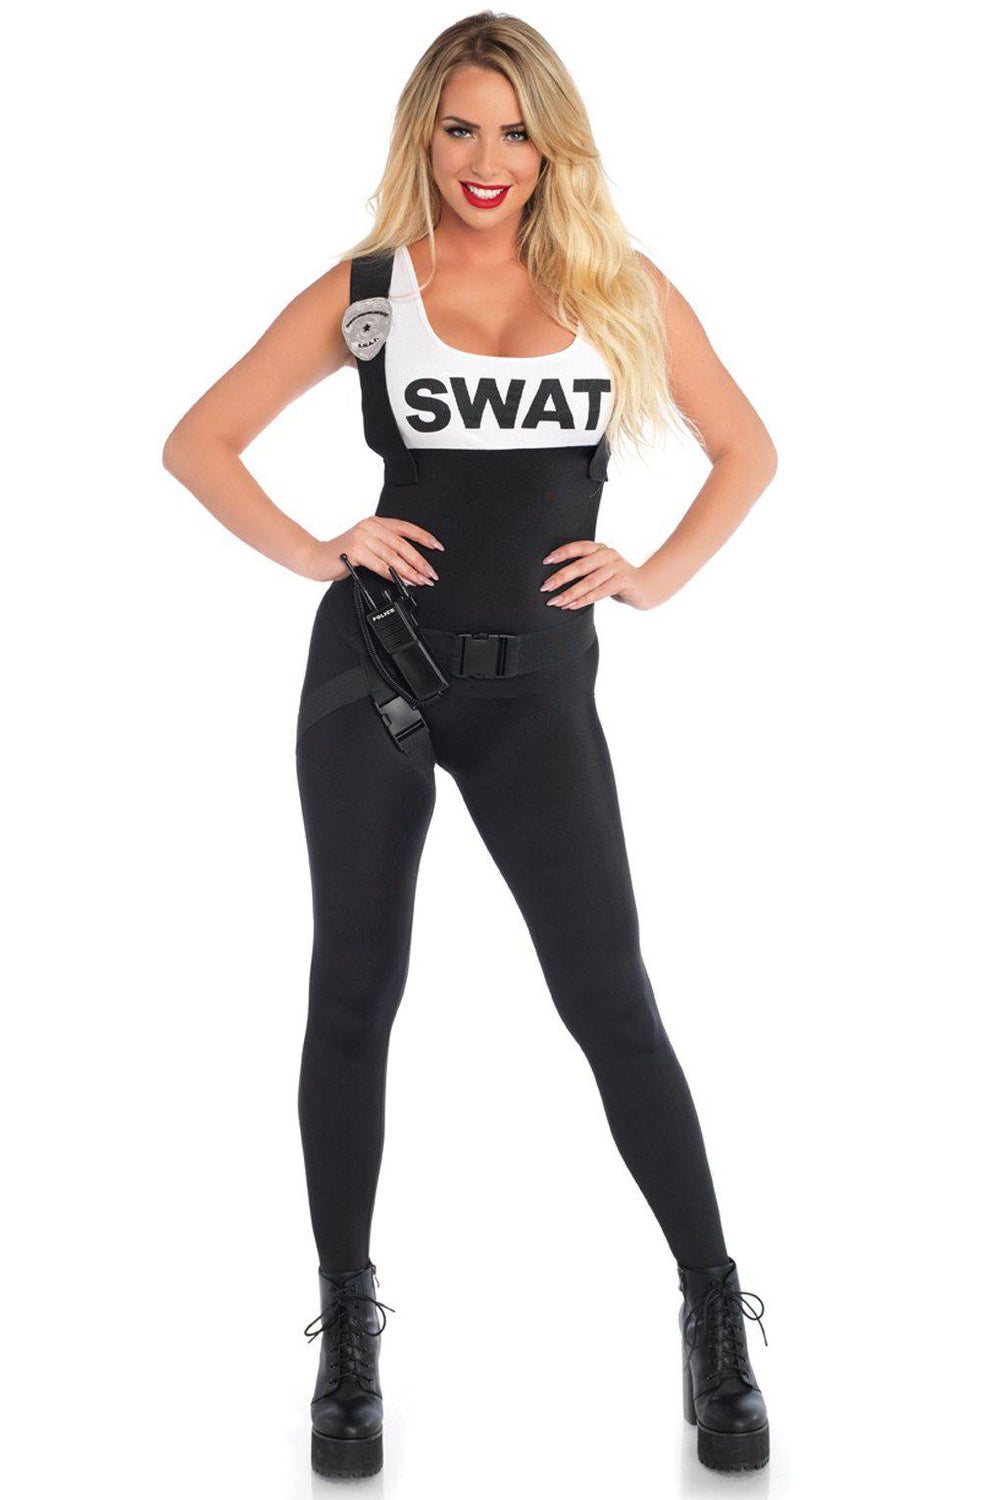 SWAT Bombshell Costume-Cop Costumes-Leg Avenue-SEXYSHOES.COM